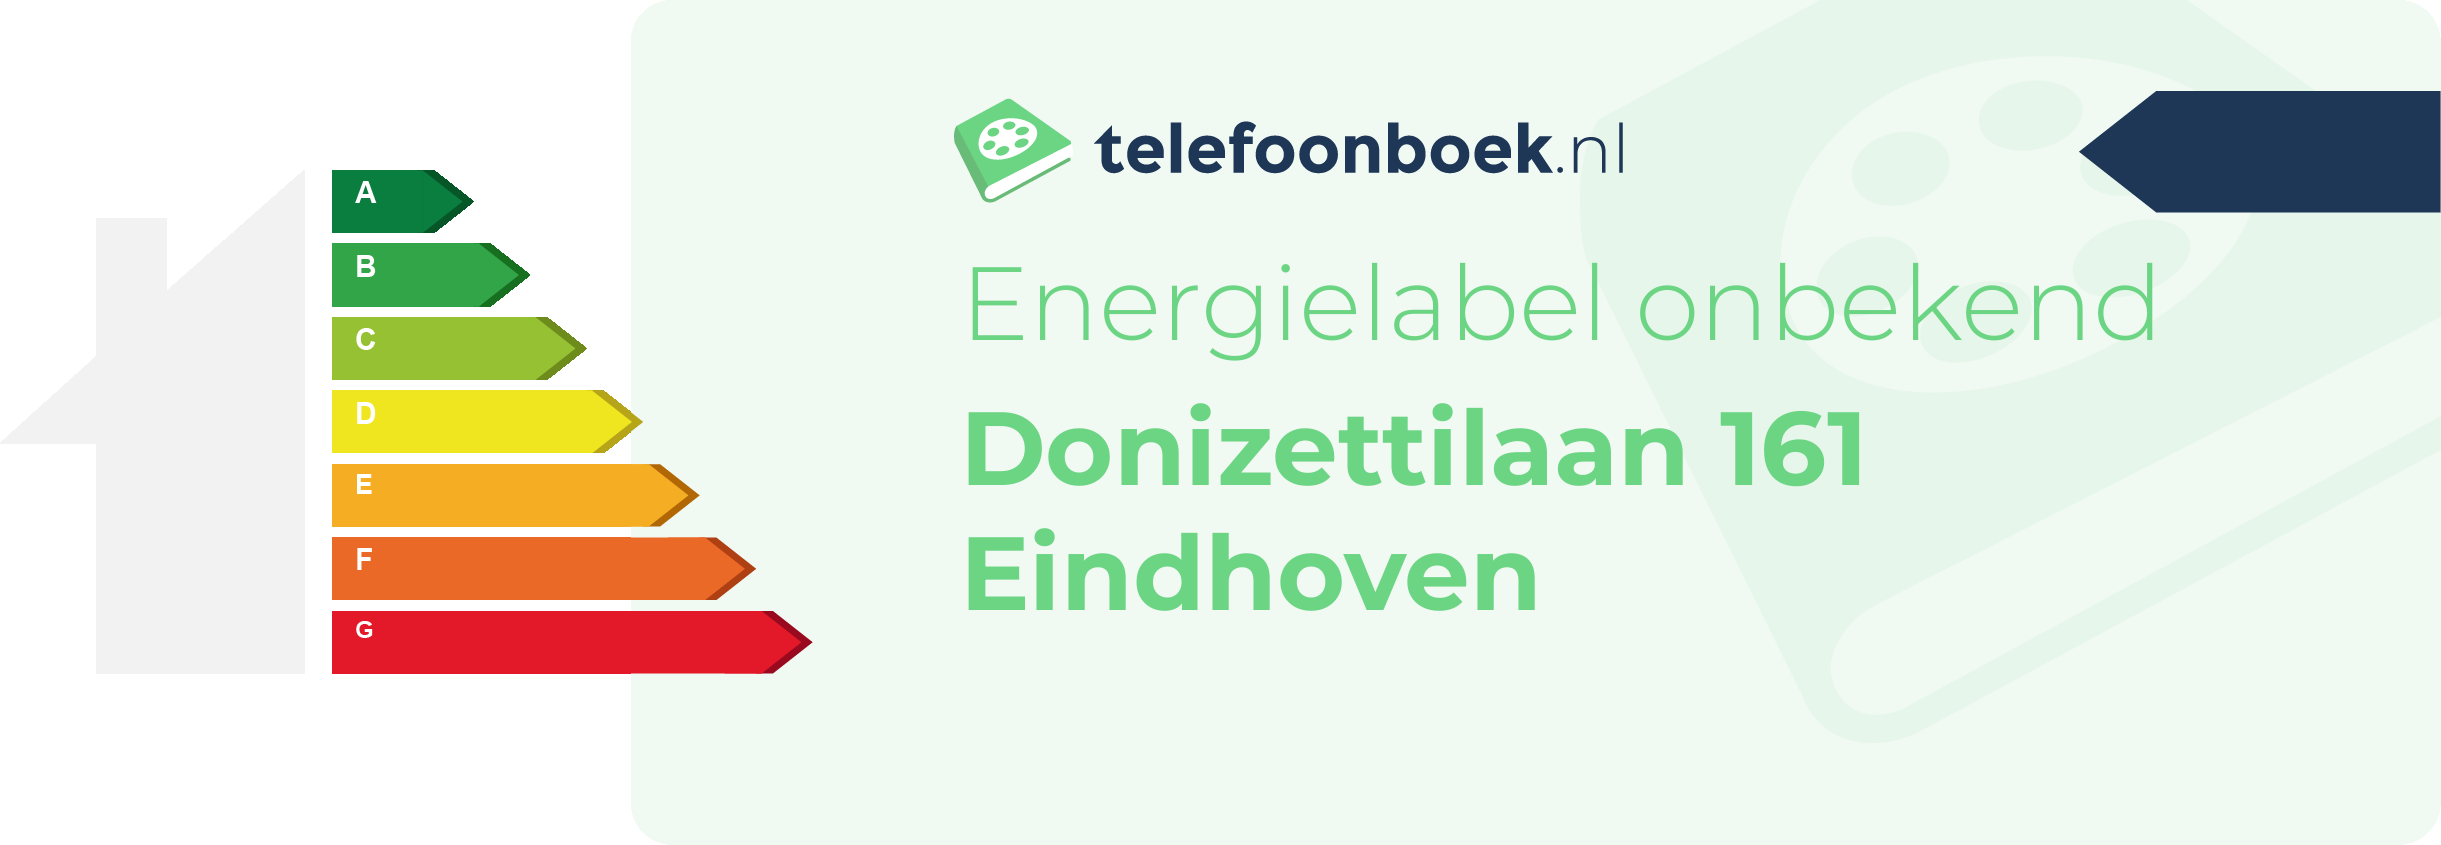 Energielabel Donizettilaan 161 Eindhoven